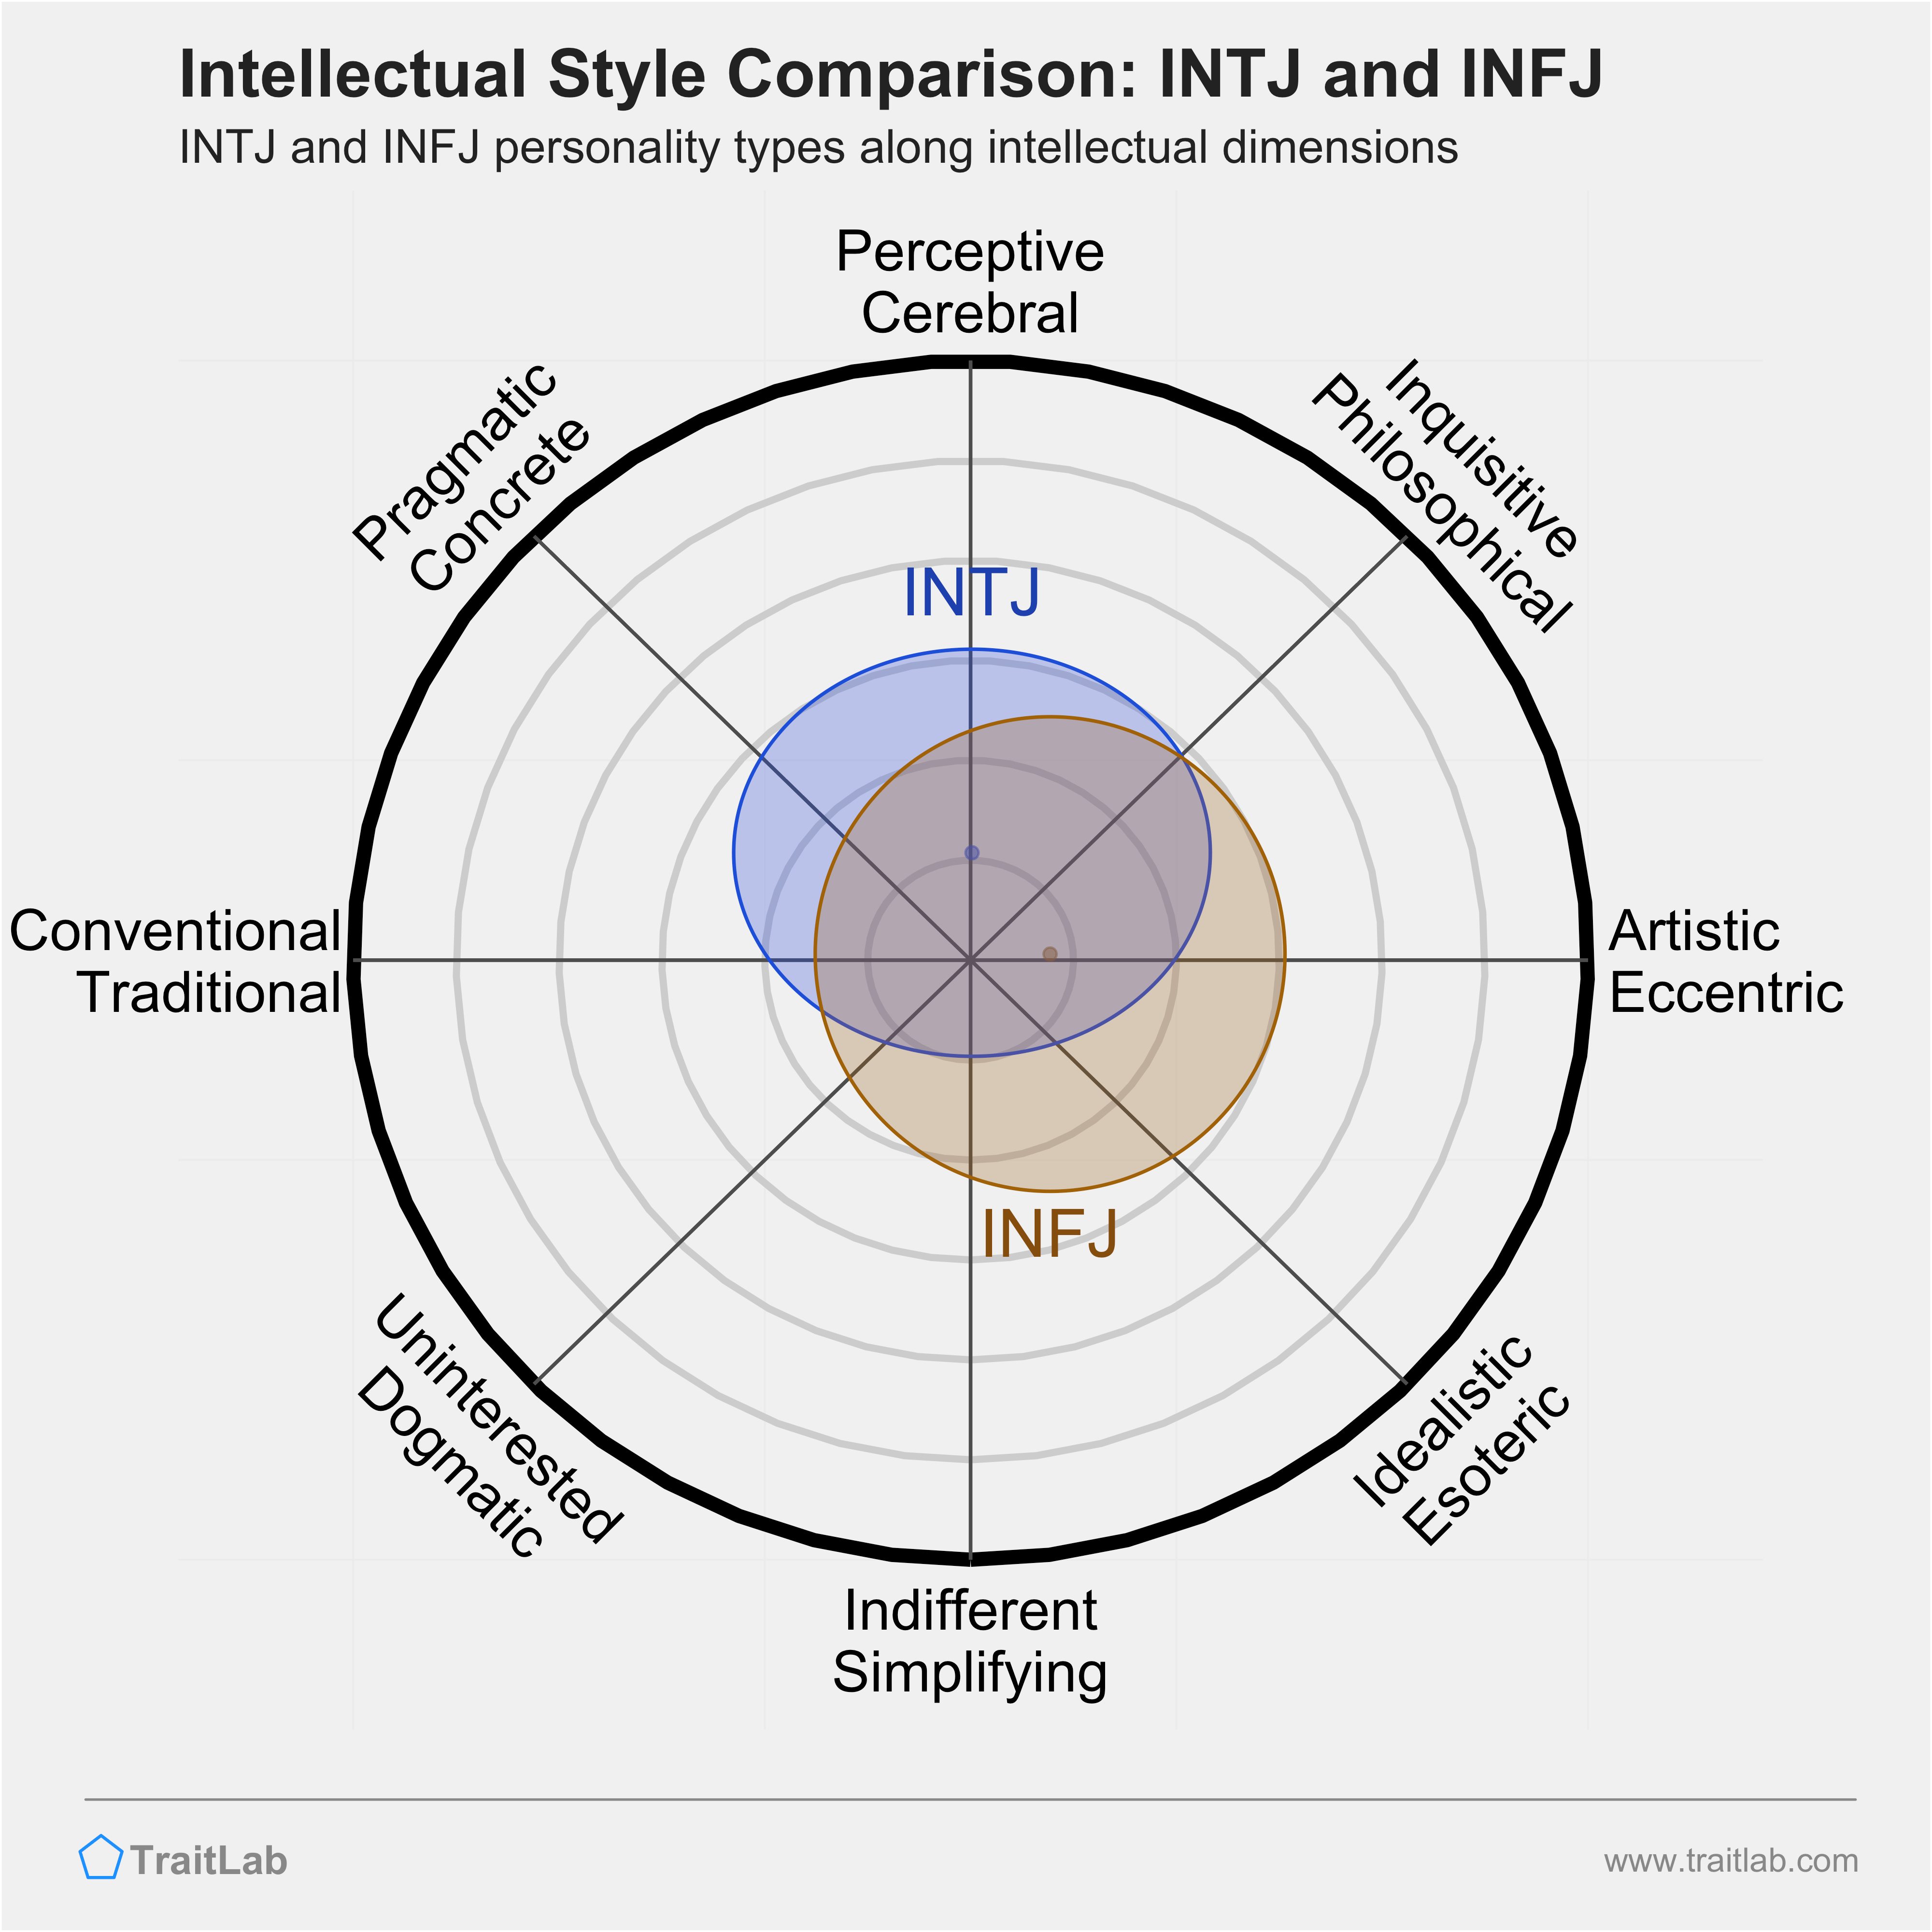 INTJ and INFJ comparison across intellectual dimensions